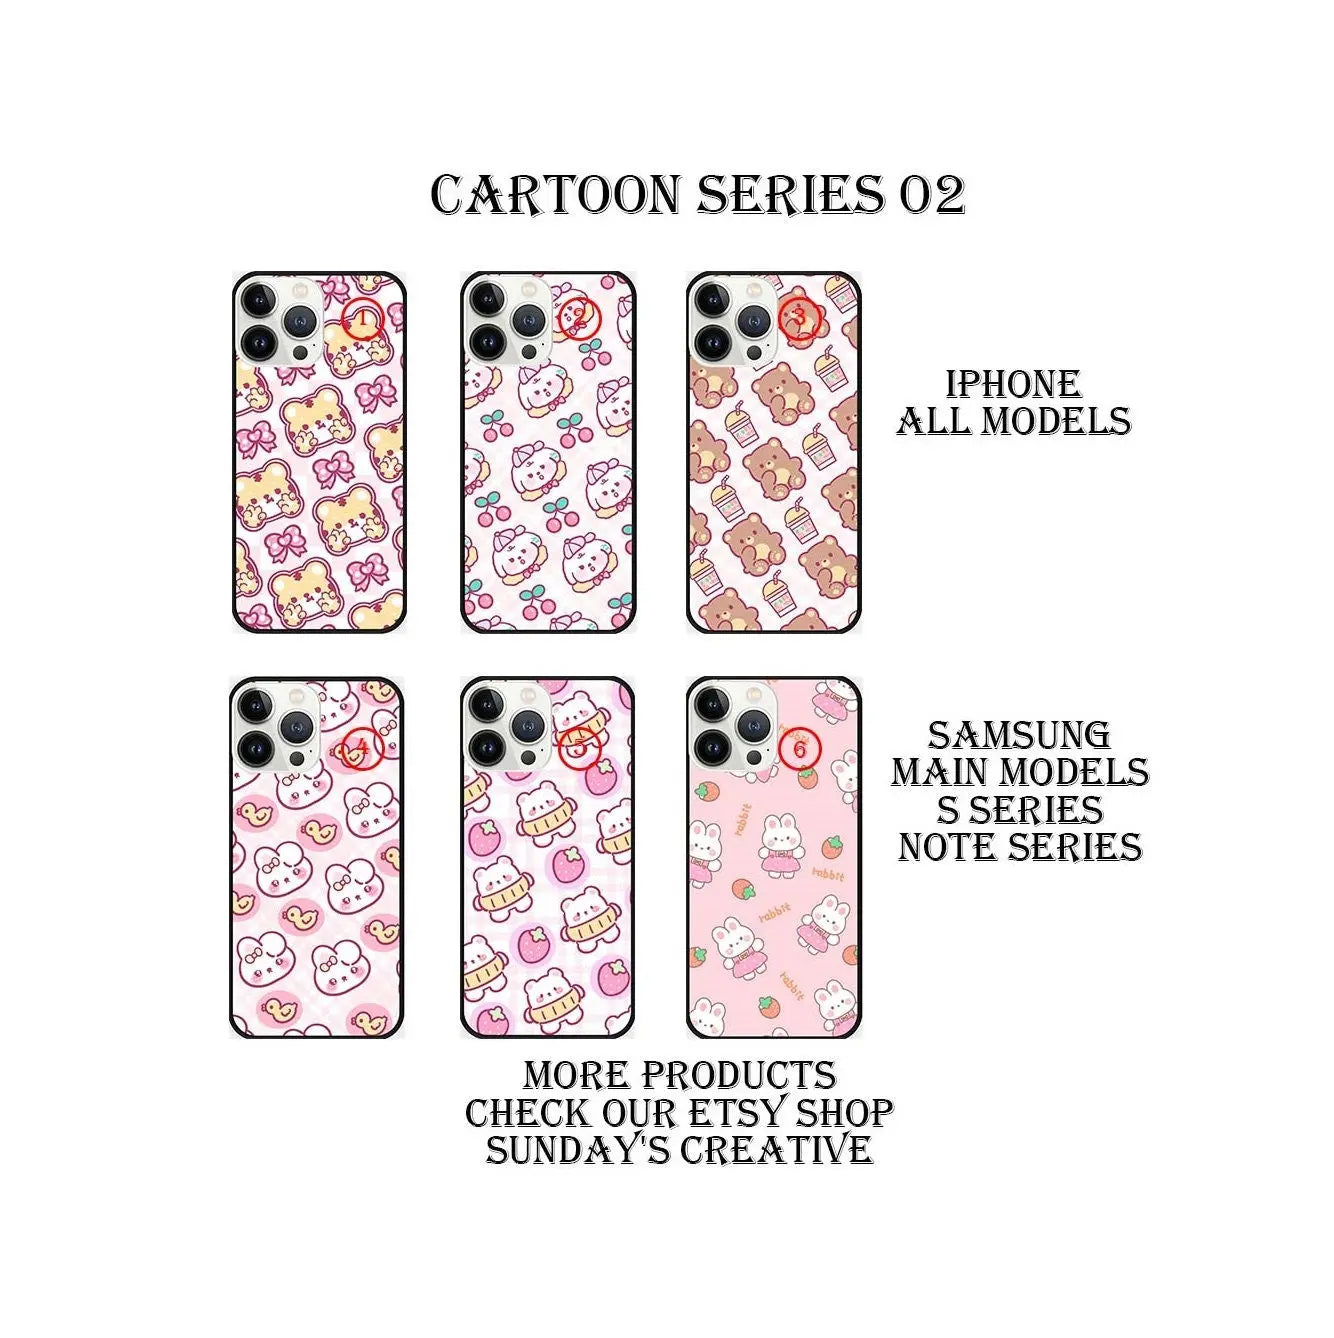 Designed phone cases cartoon series 02 Sunday's Creative